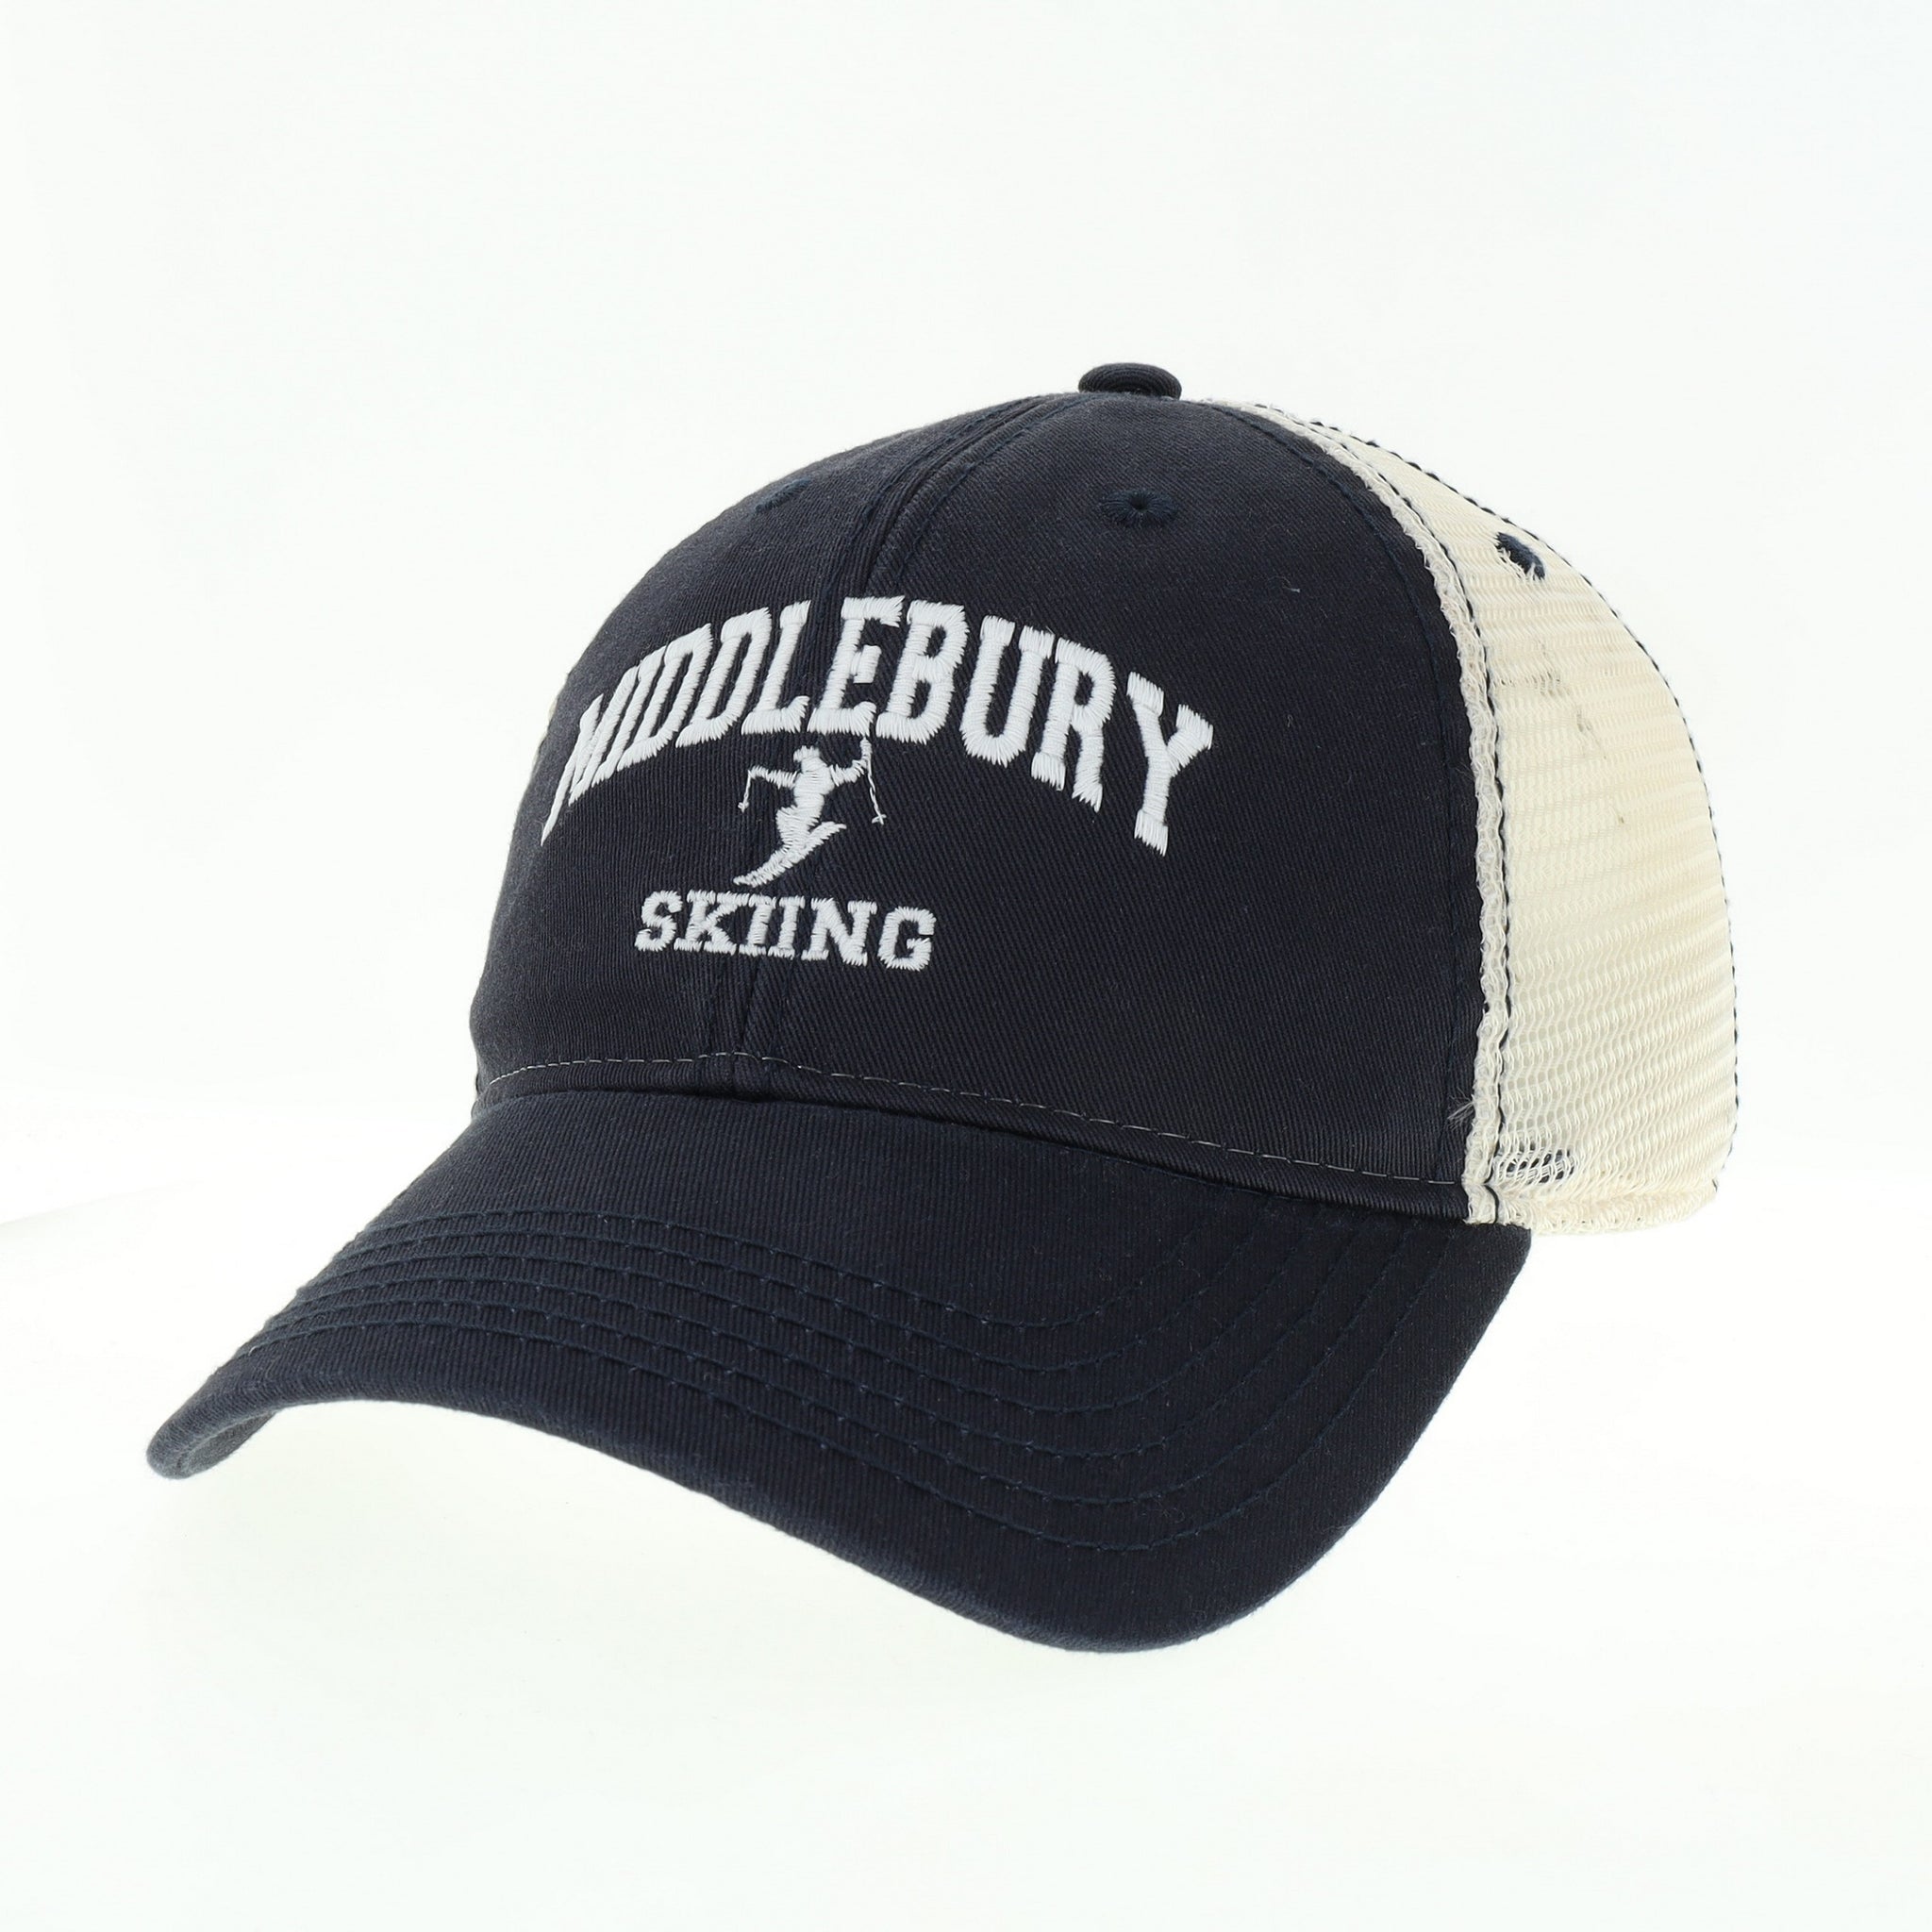 Middlebury Skiing Trucker Hat